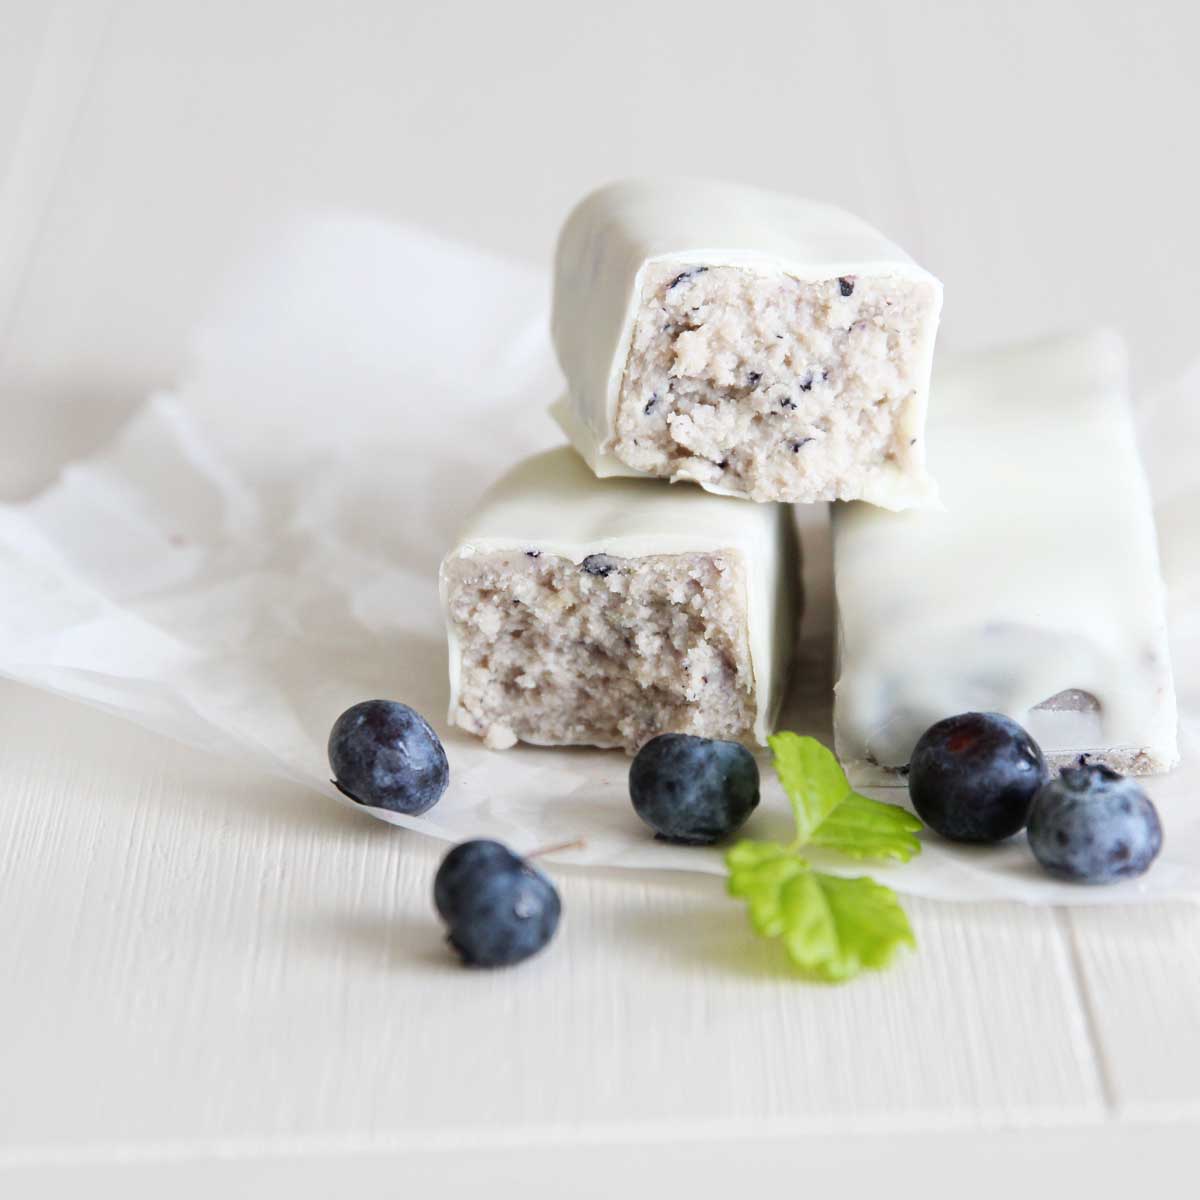 Healthy Blueberry Greek Yogurt Protein Bars (Easy, No Bake Recipe) - Chocolate Protein Balls